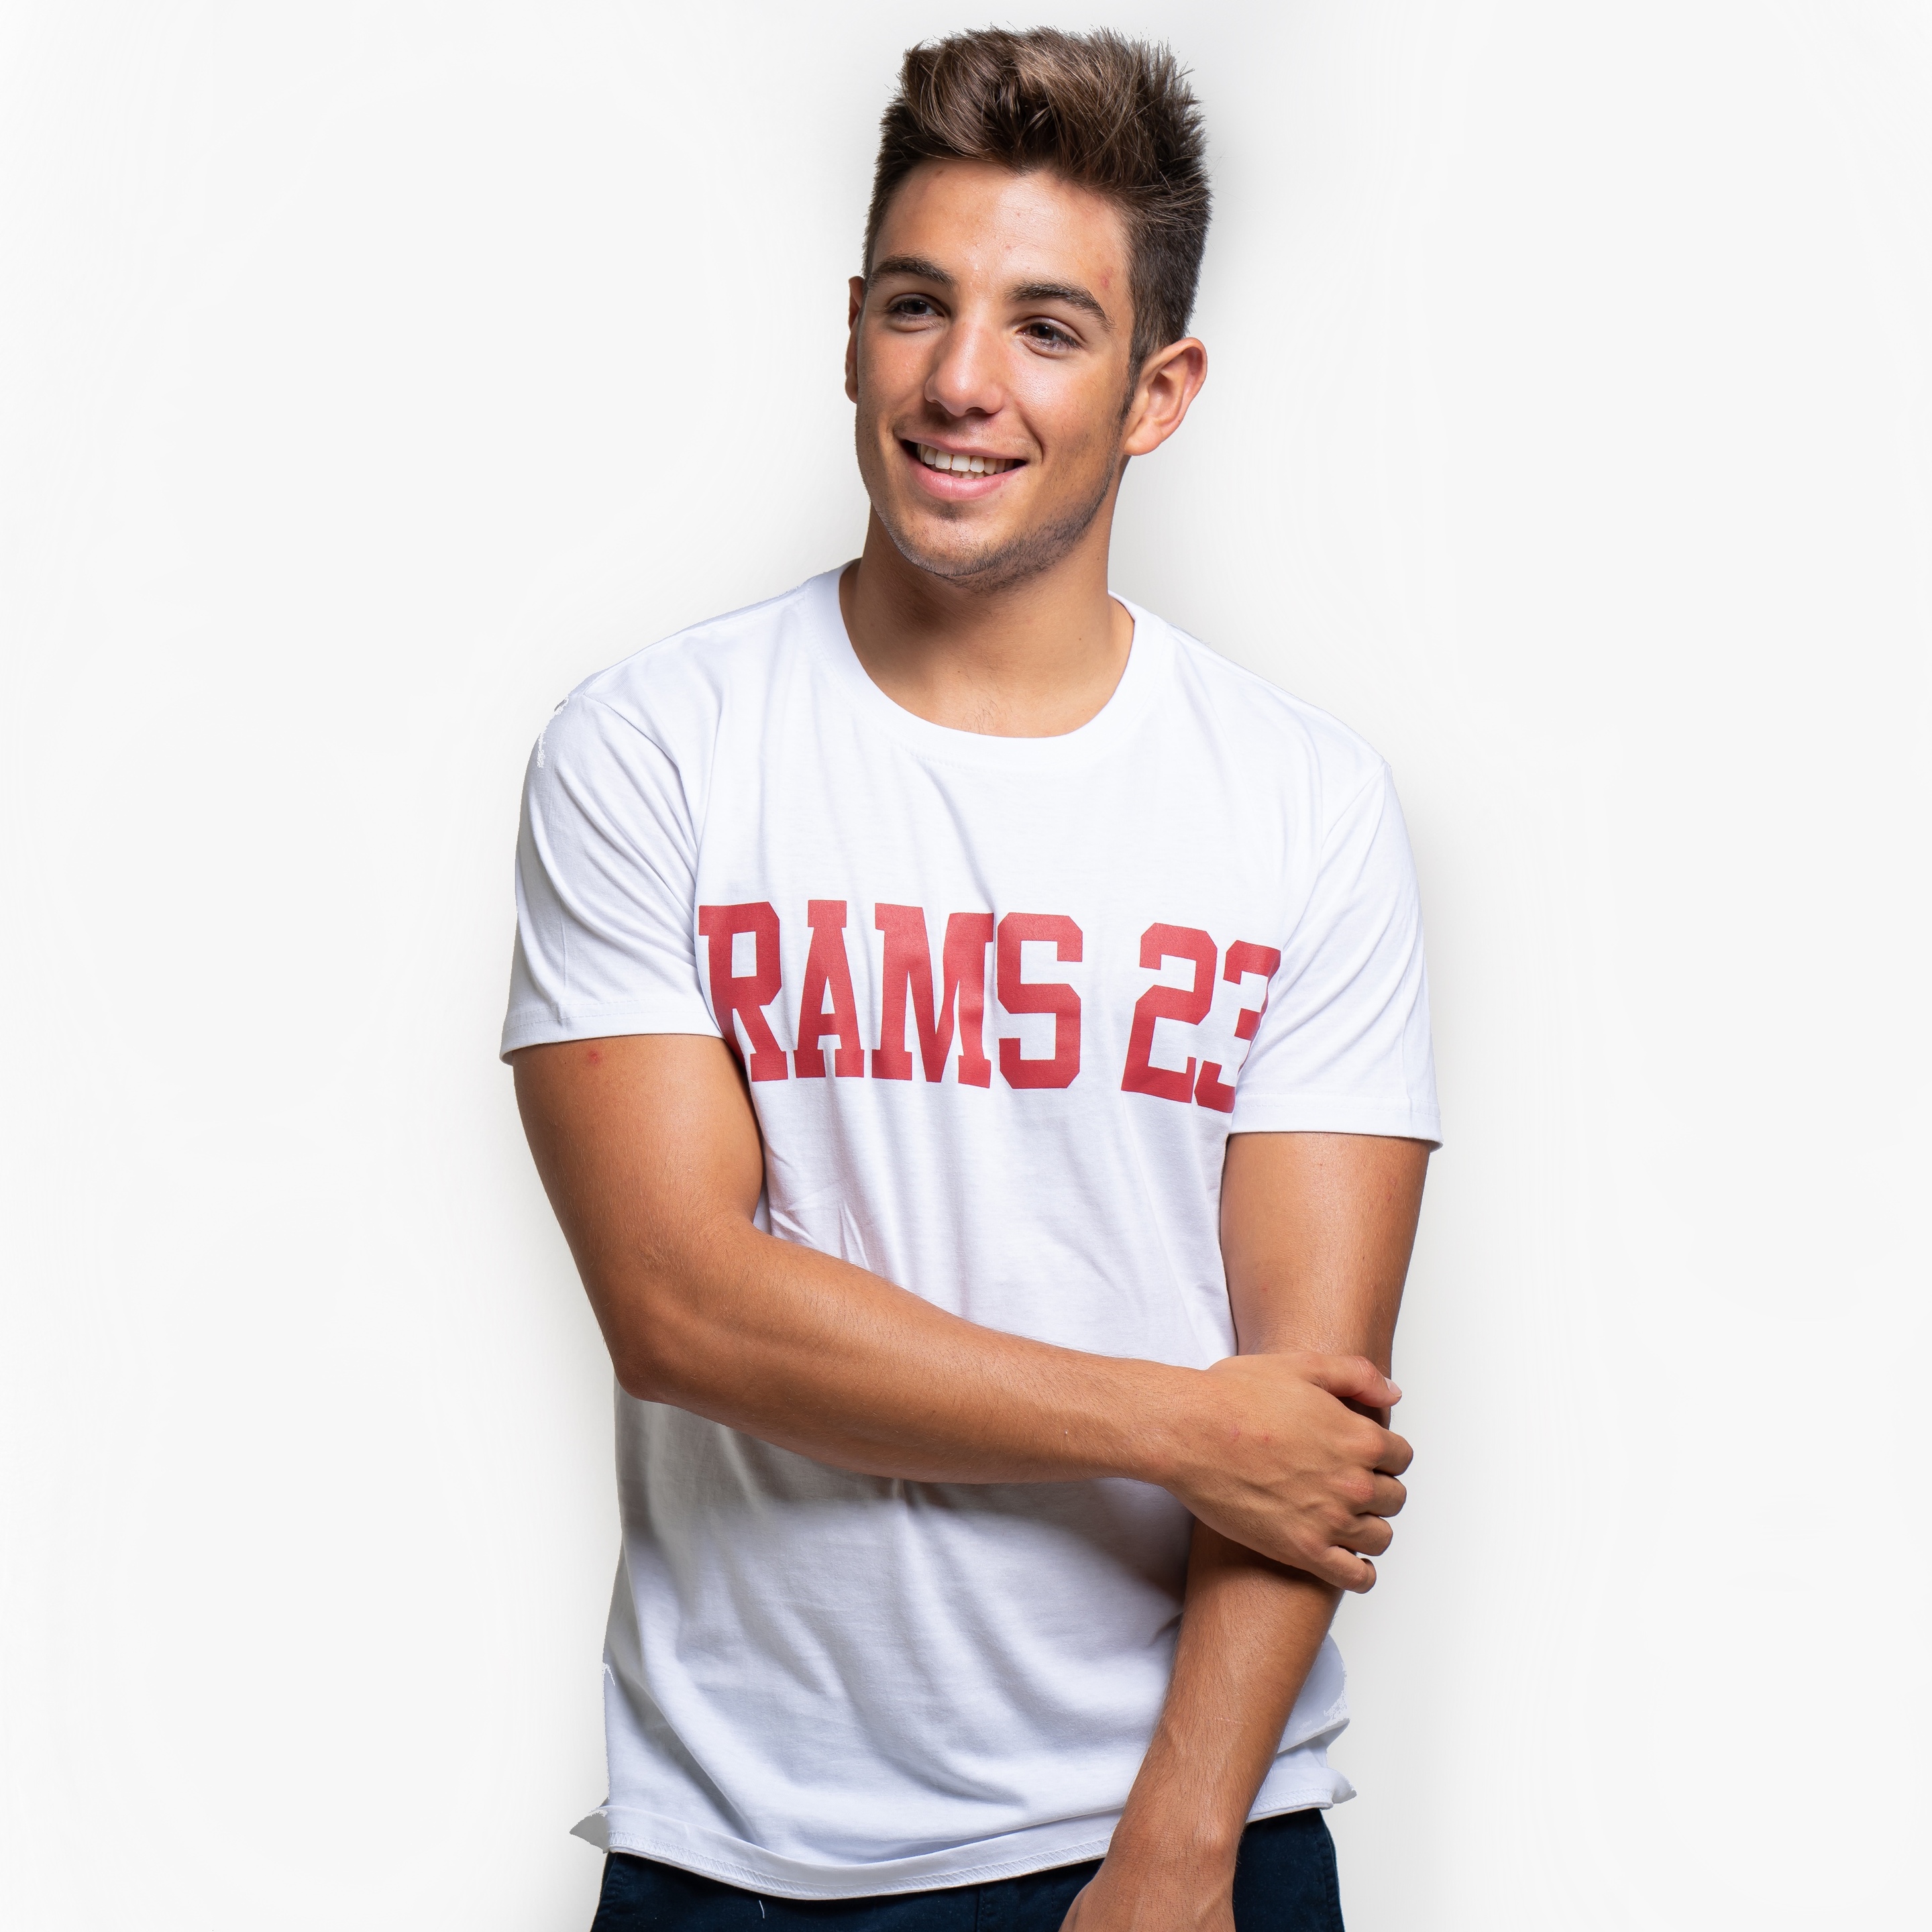 Camiseta Rams 23 Logo Grande